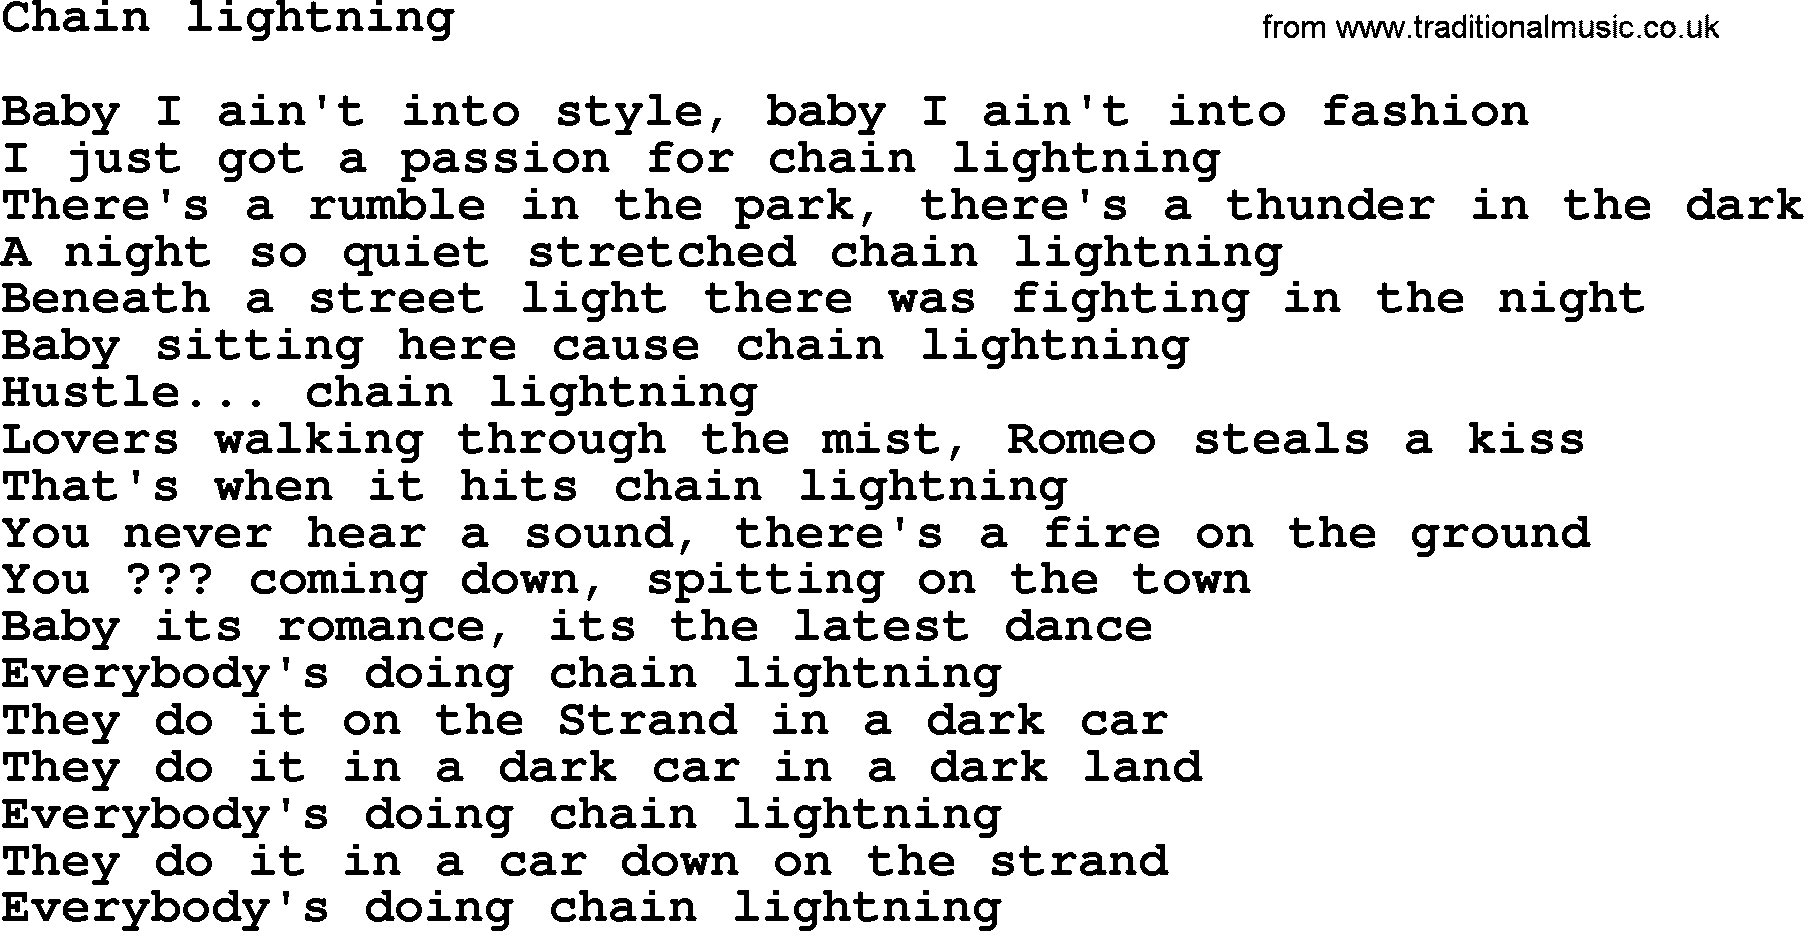 Bruce Springsteen song: Chain Lightning lyrics